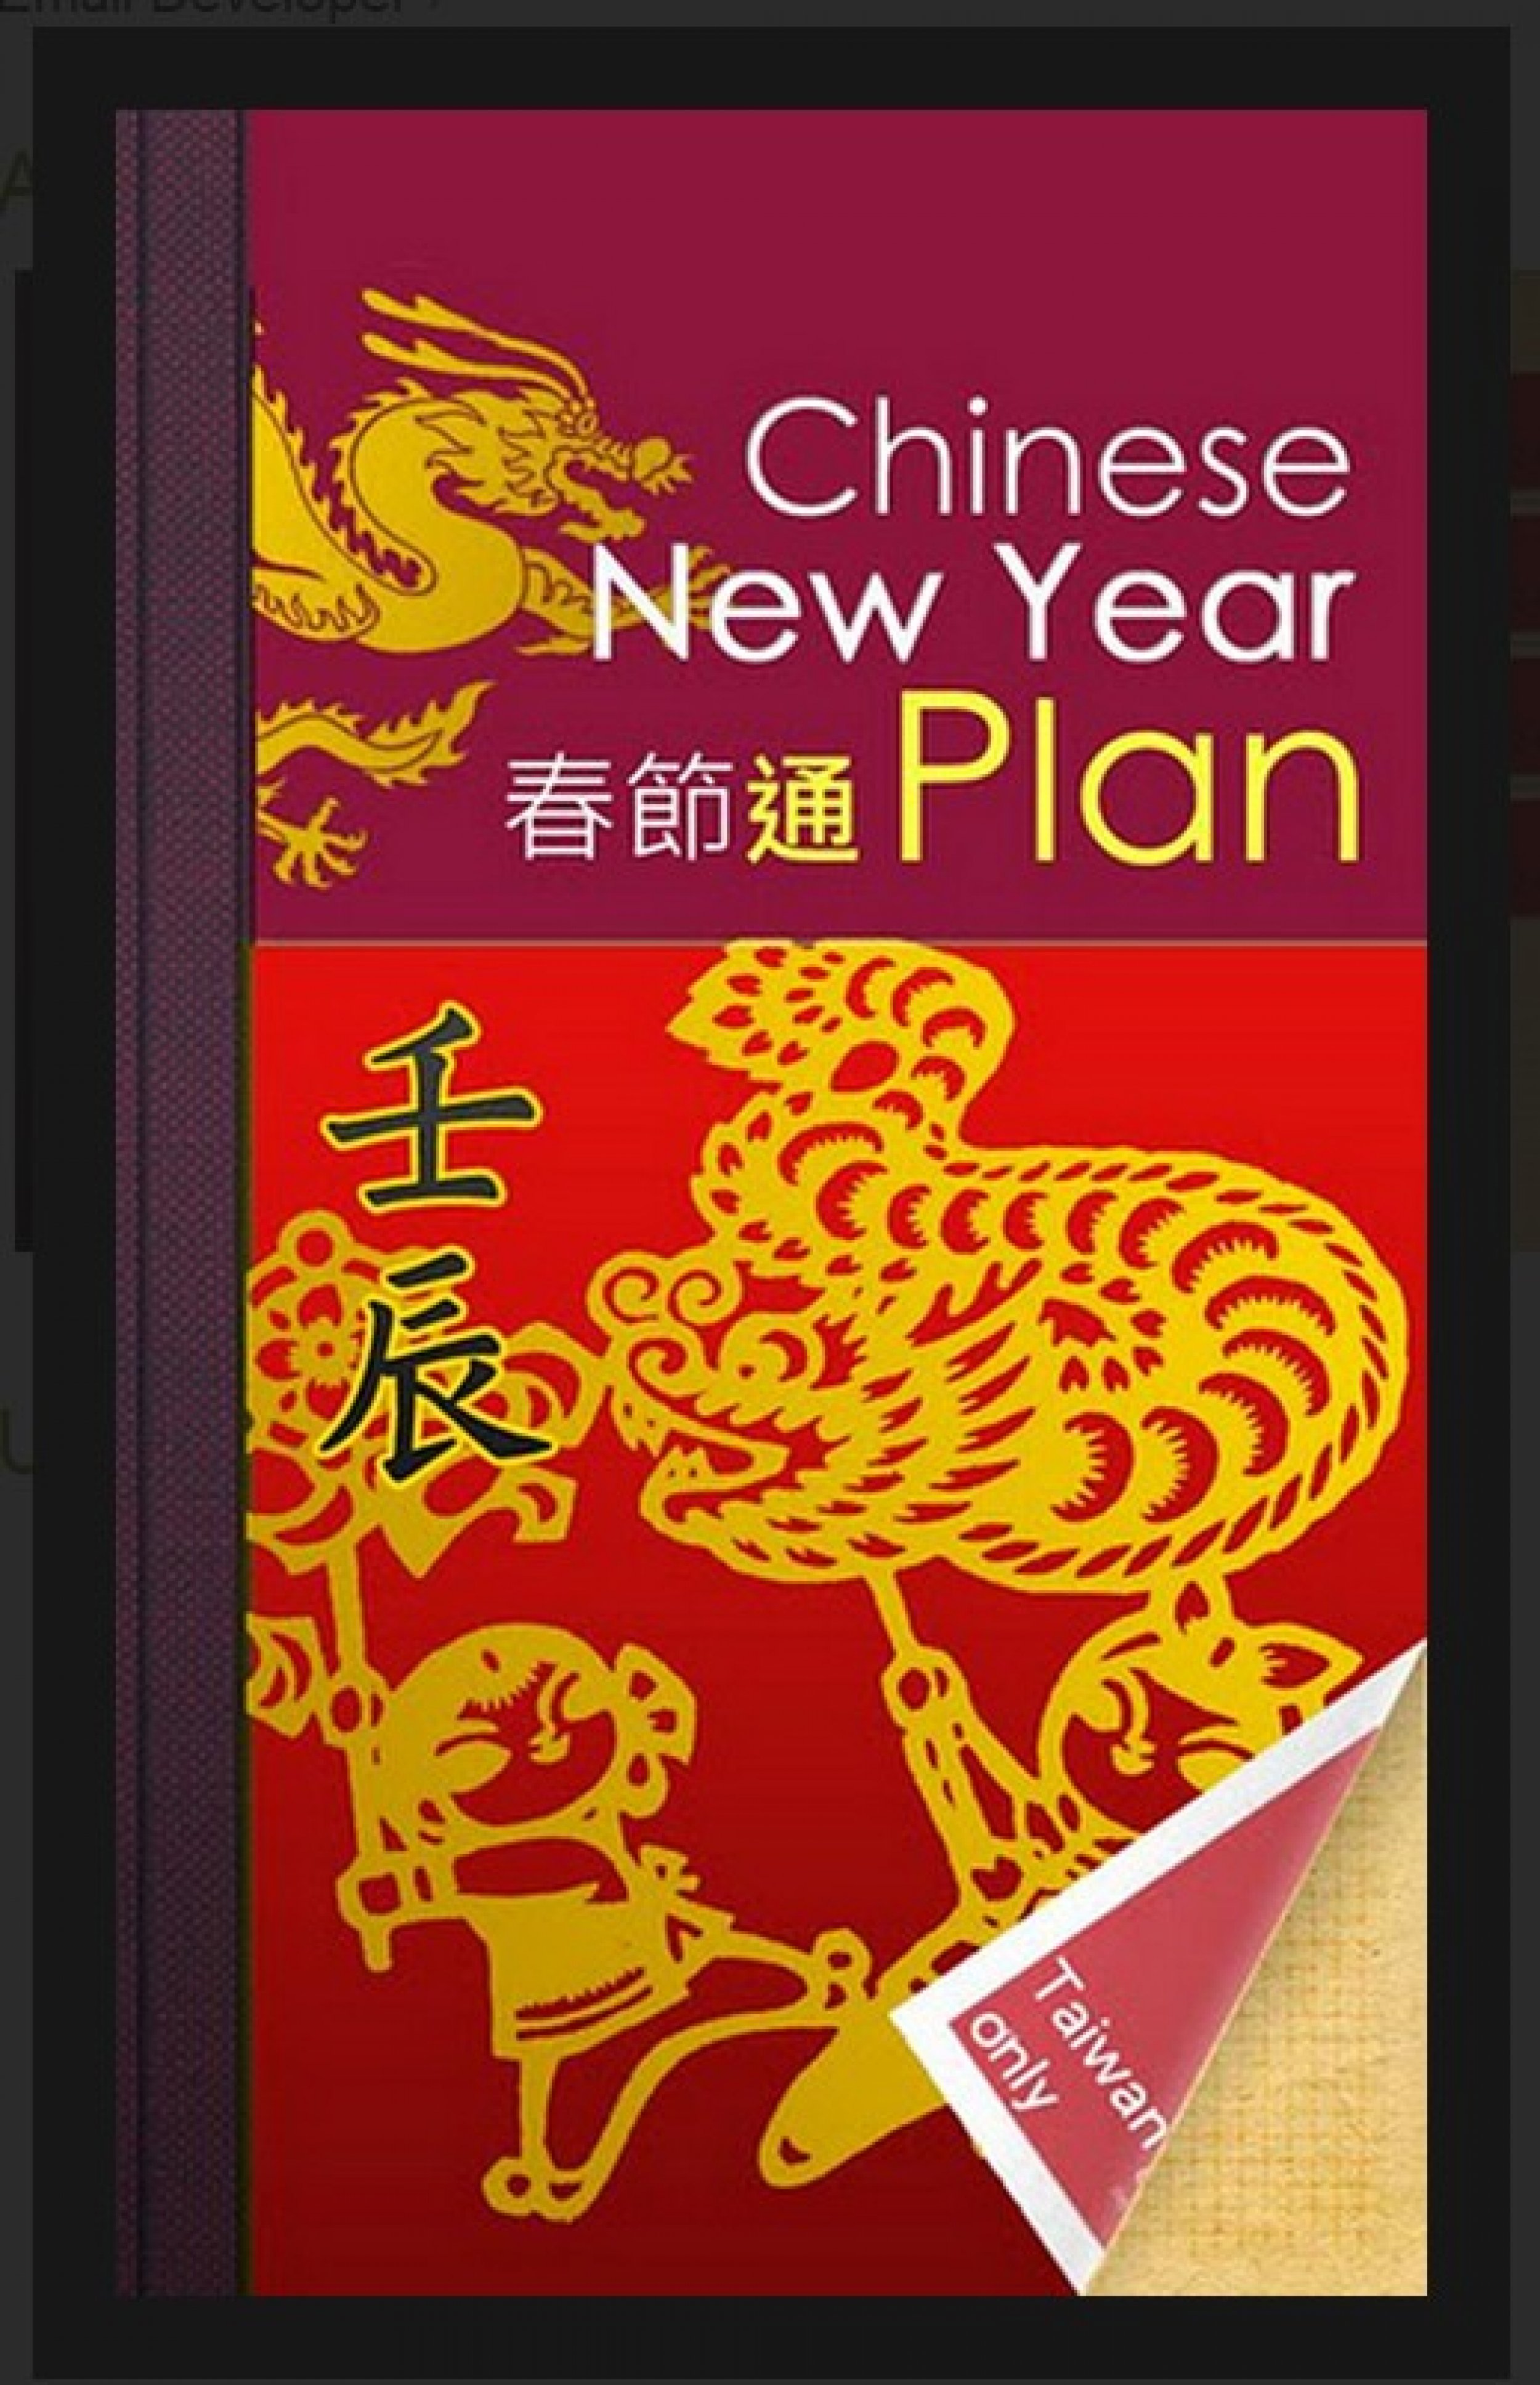 Chinese New Year Plan